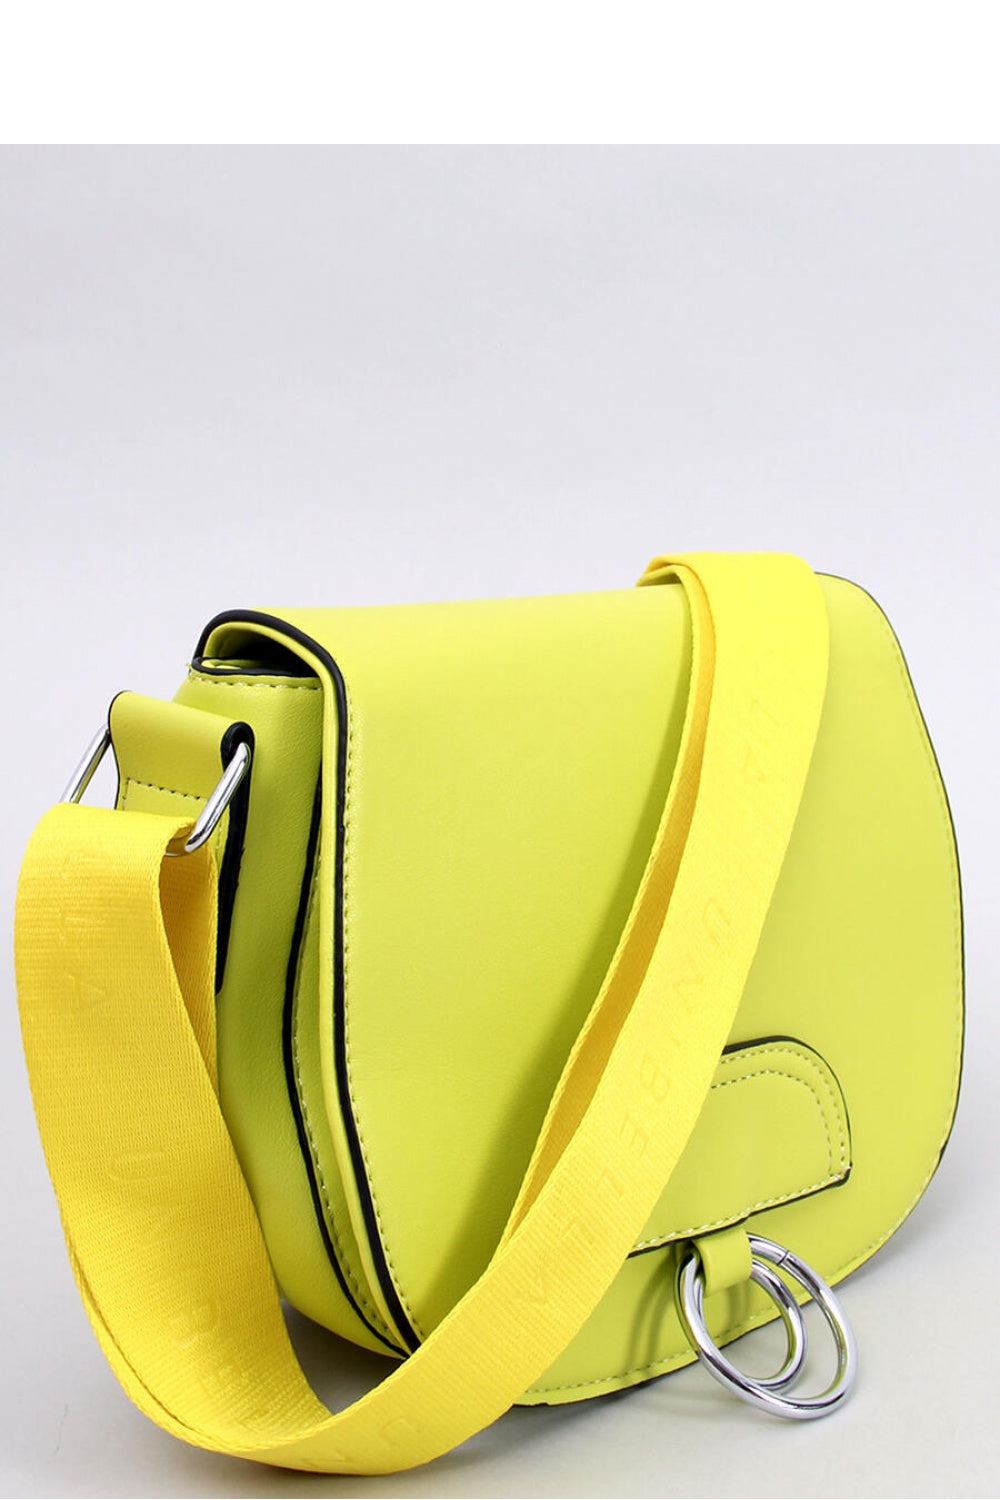 Messenger bag model 180414 Elsy Style Casual Handbags, Shoulder Bags